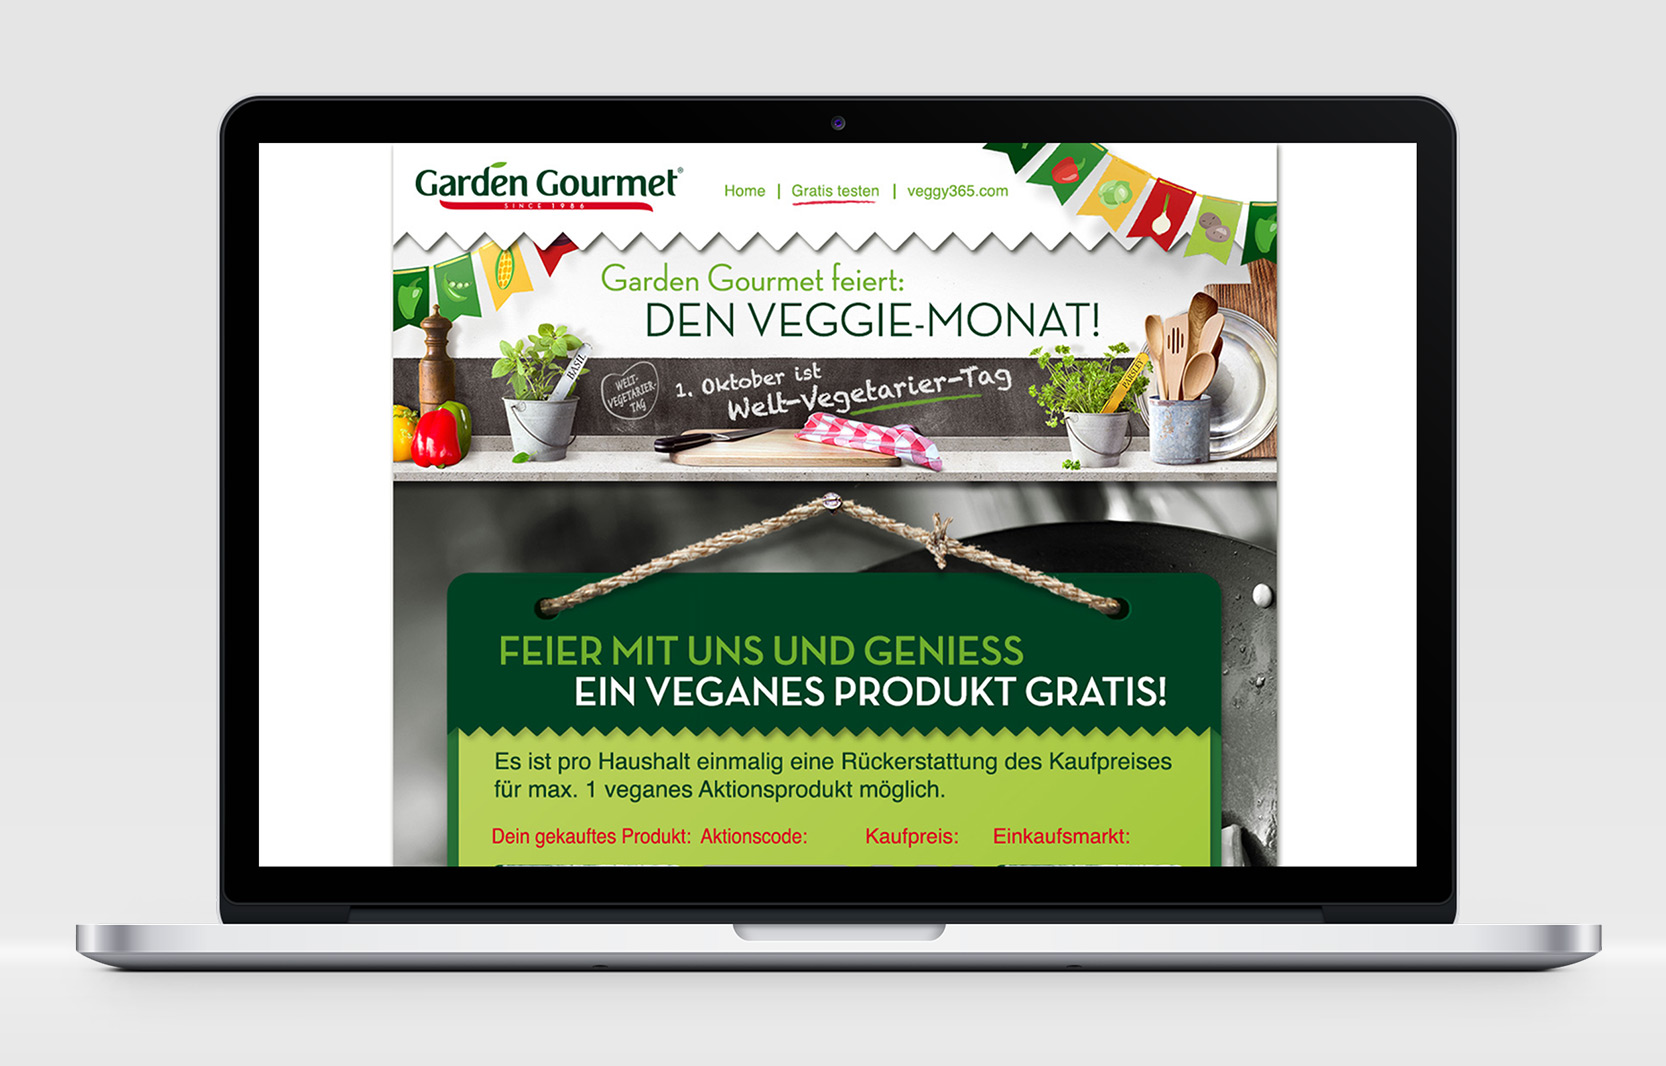 Garden Gourmet Veggie-Monat - groß